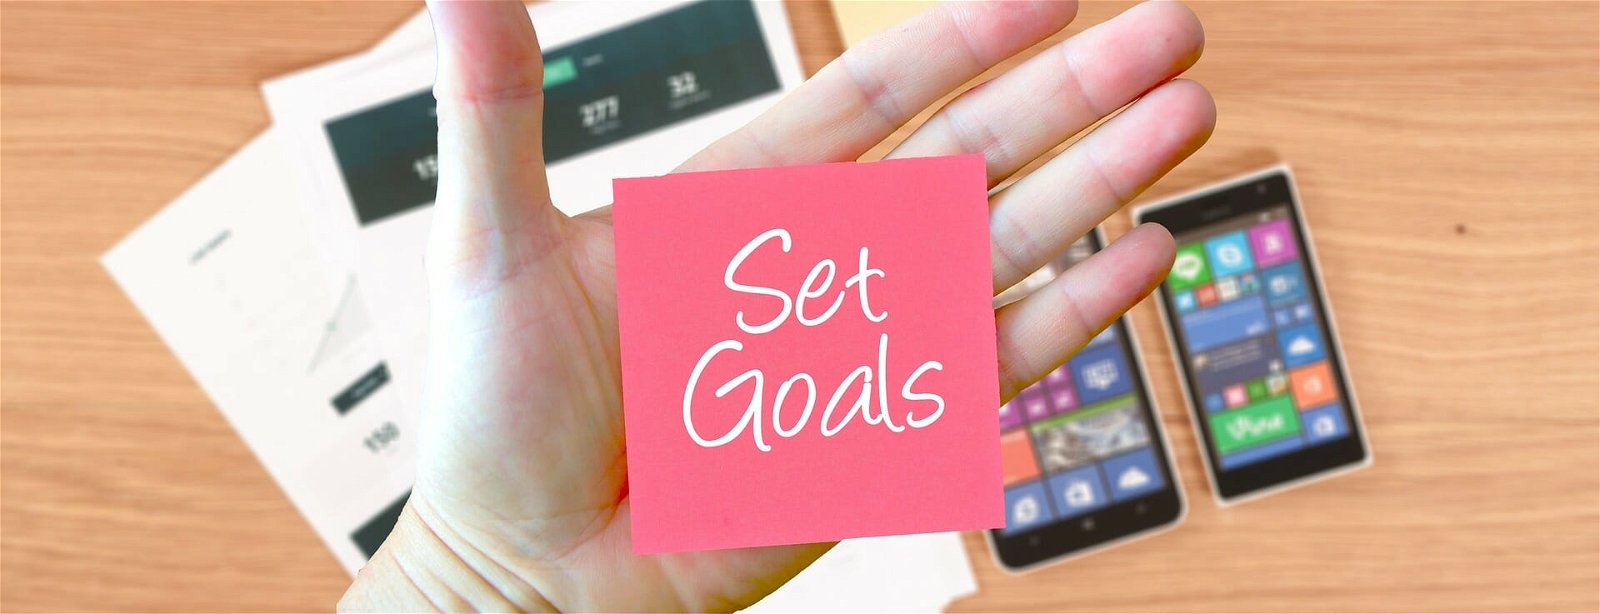 Set goals-eCommerce Businesses